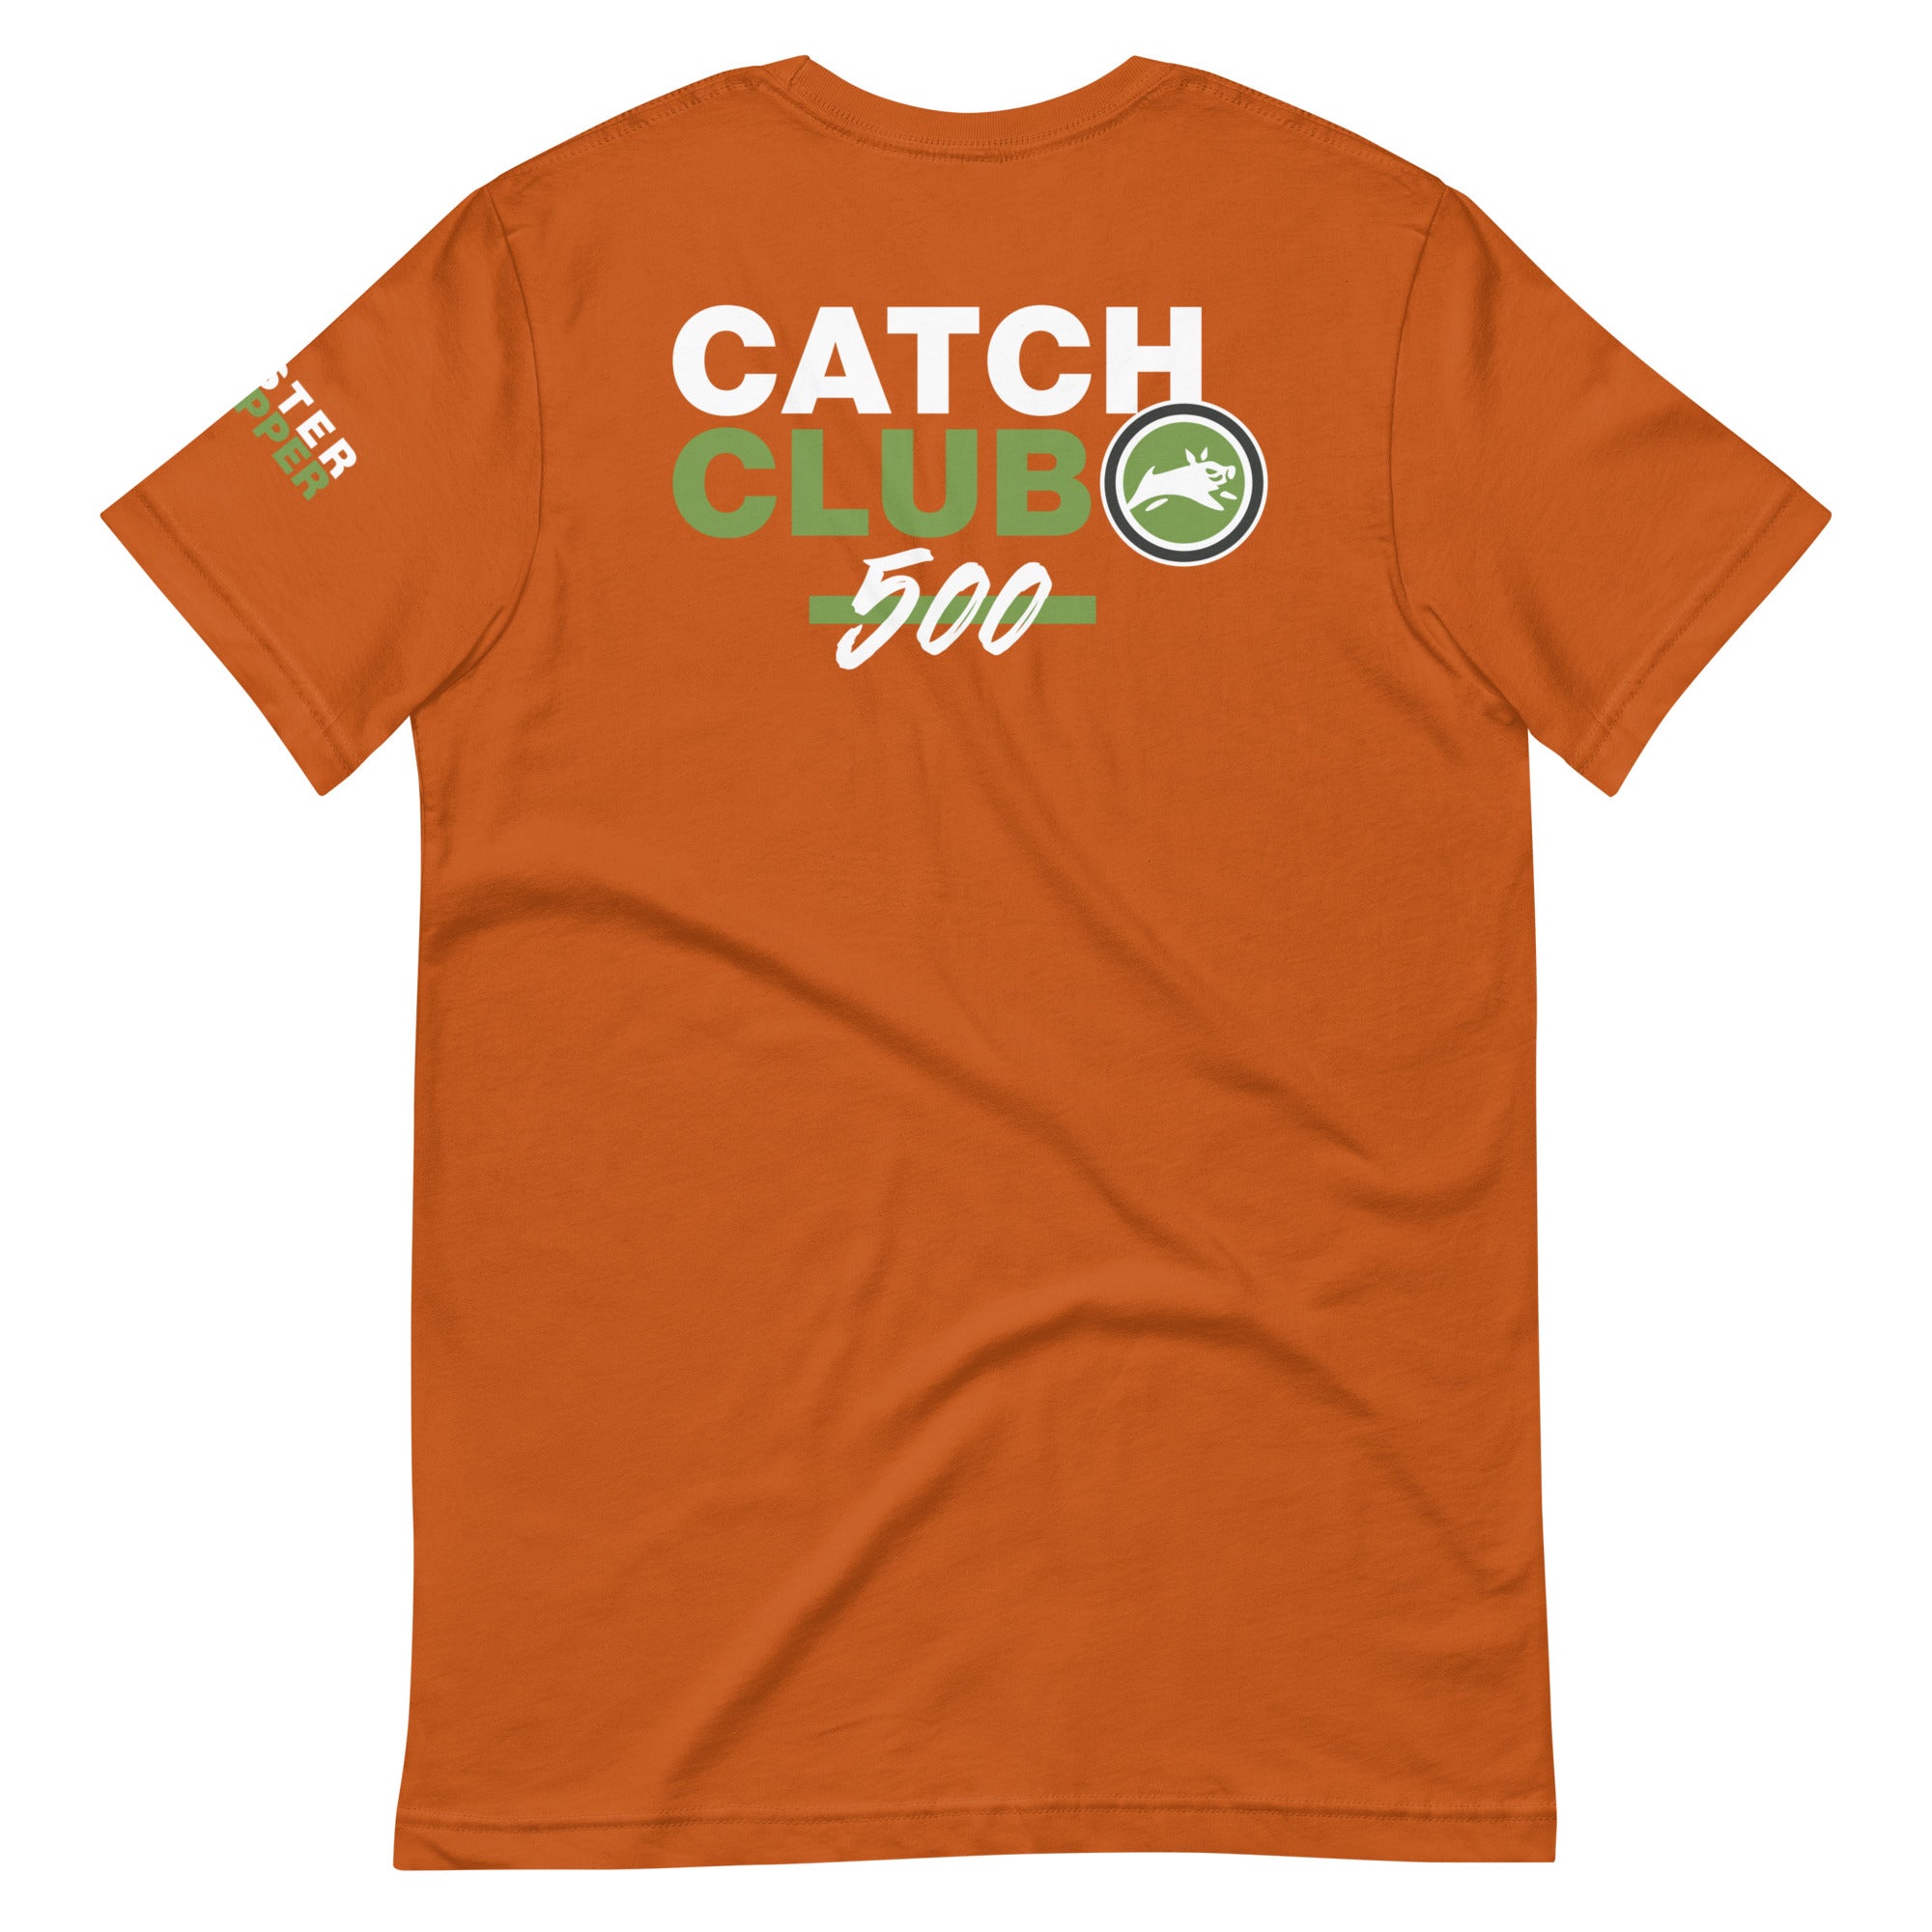 500 Catch Club Short-Sleeve Unisex T-Shirt